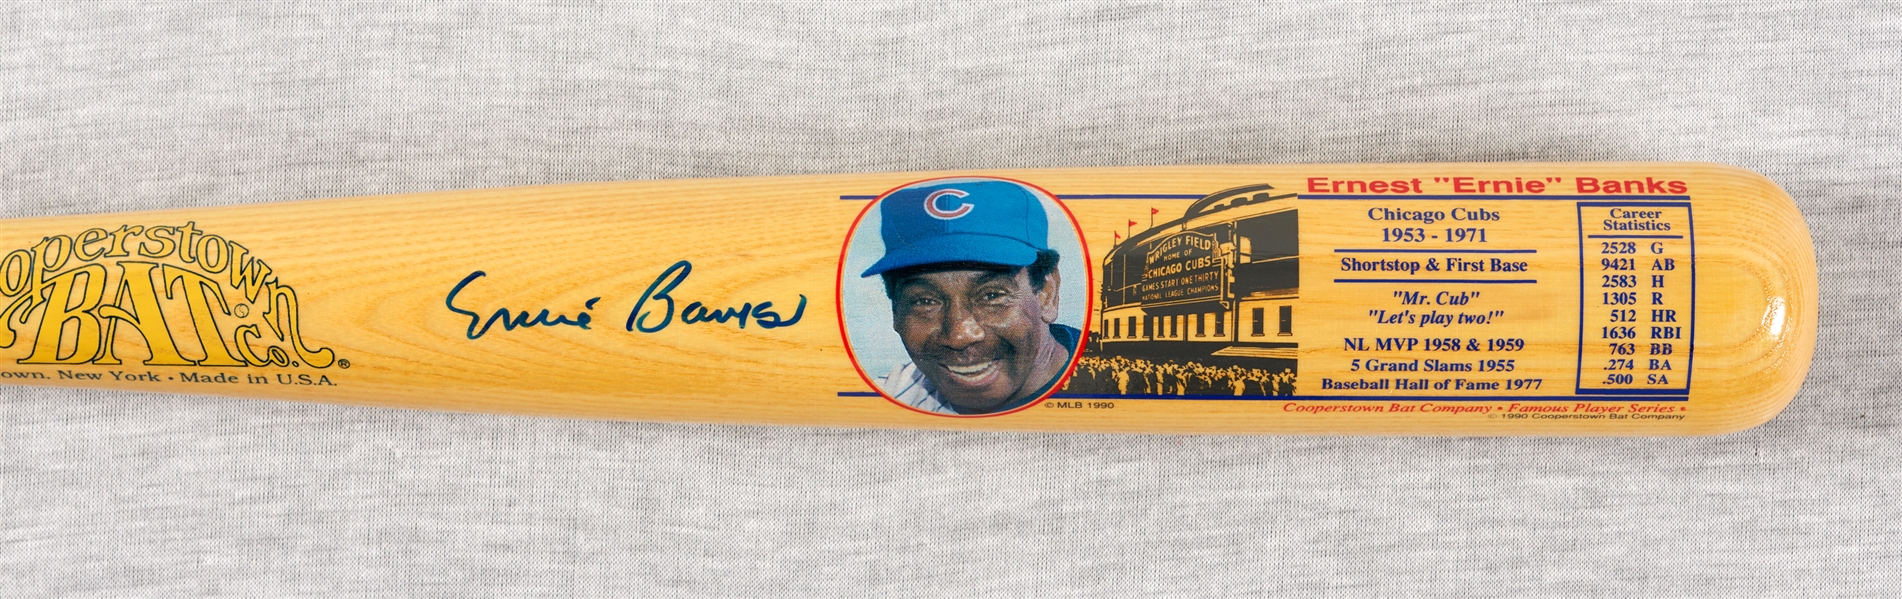 Ernie Banks Signed Cooperstown Bat Co. Decal Bat (741/1000) (PSA/DNA)